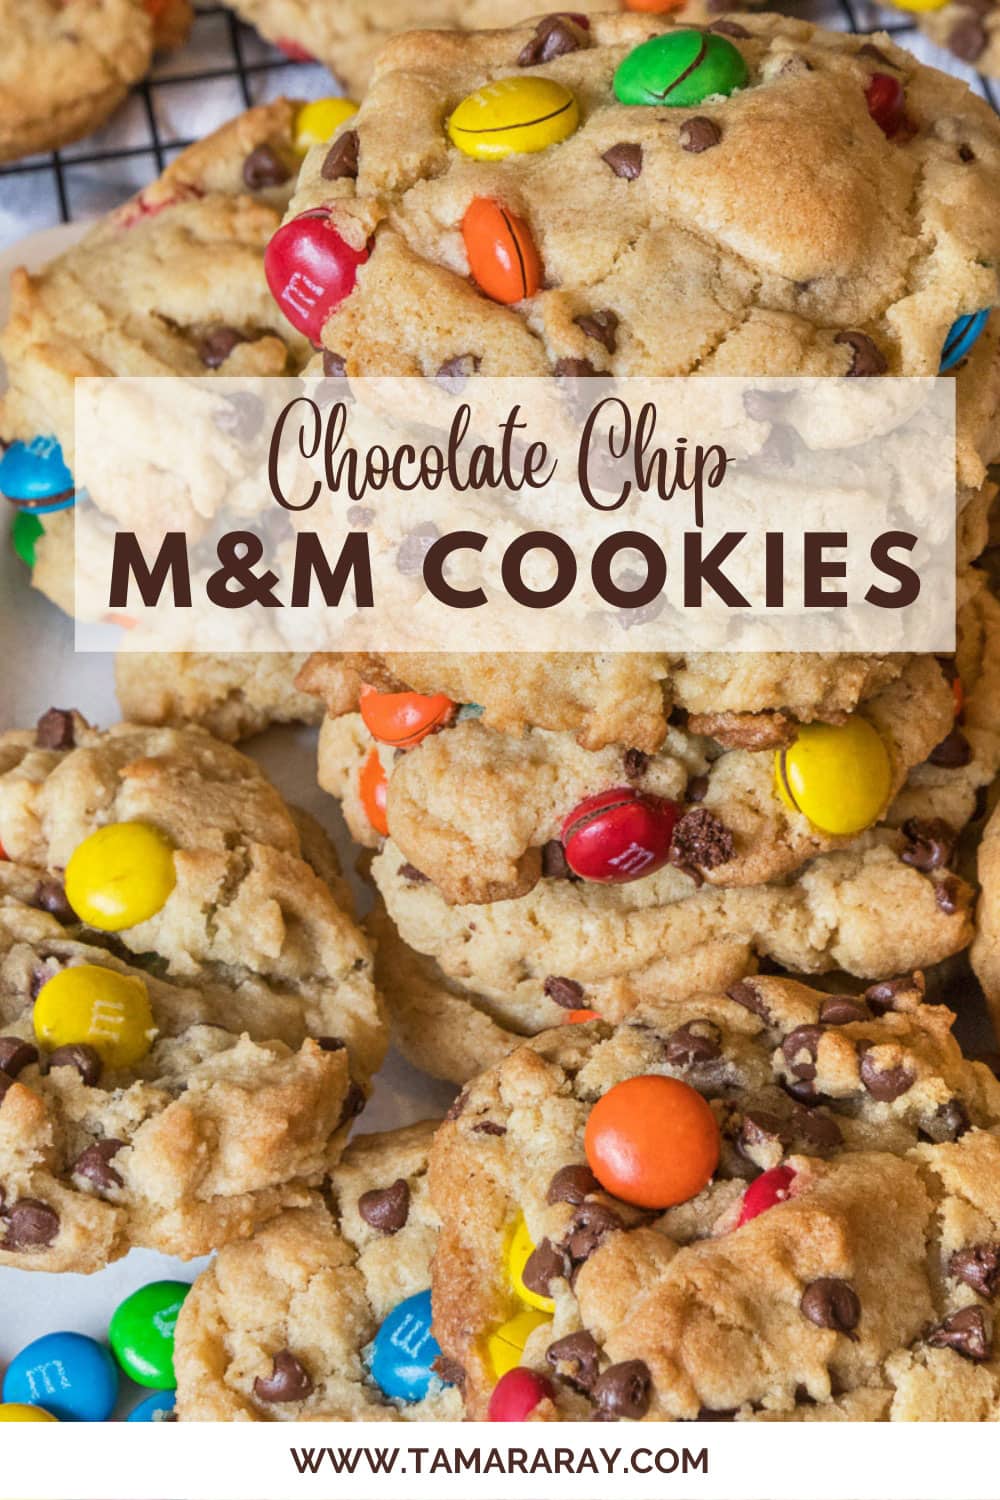 Chocolate chip M&M cookies.